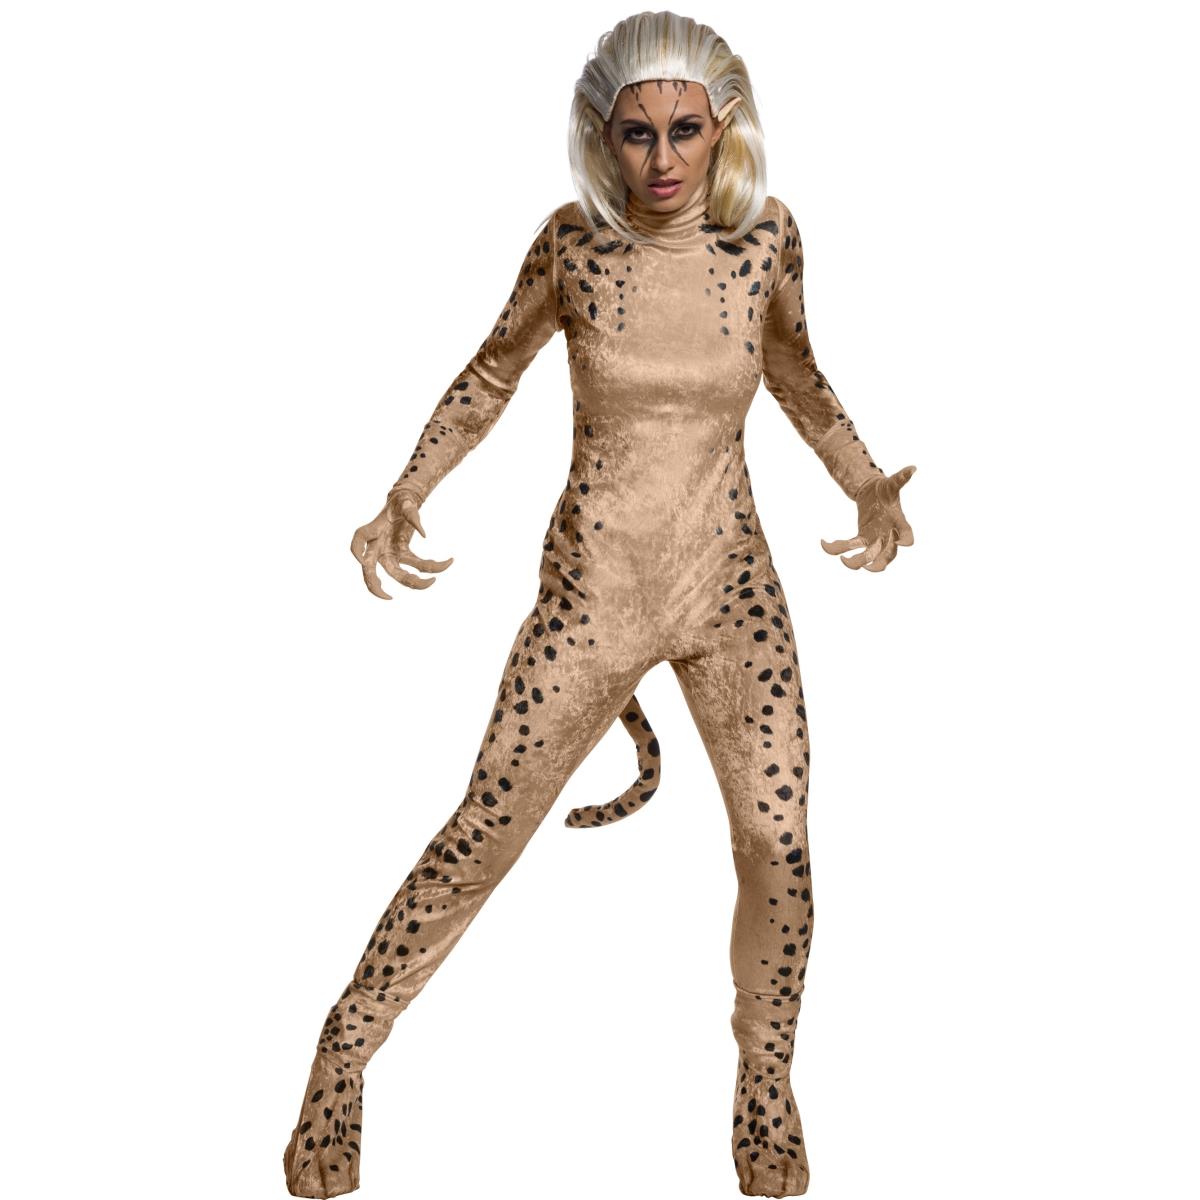 Picture of Rubies 643144 WW2 Movie Cheetah Deluxe Adult Costume - Medium